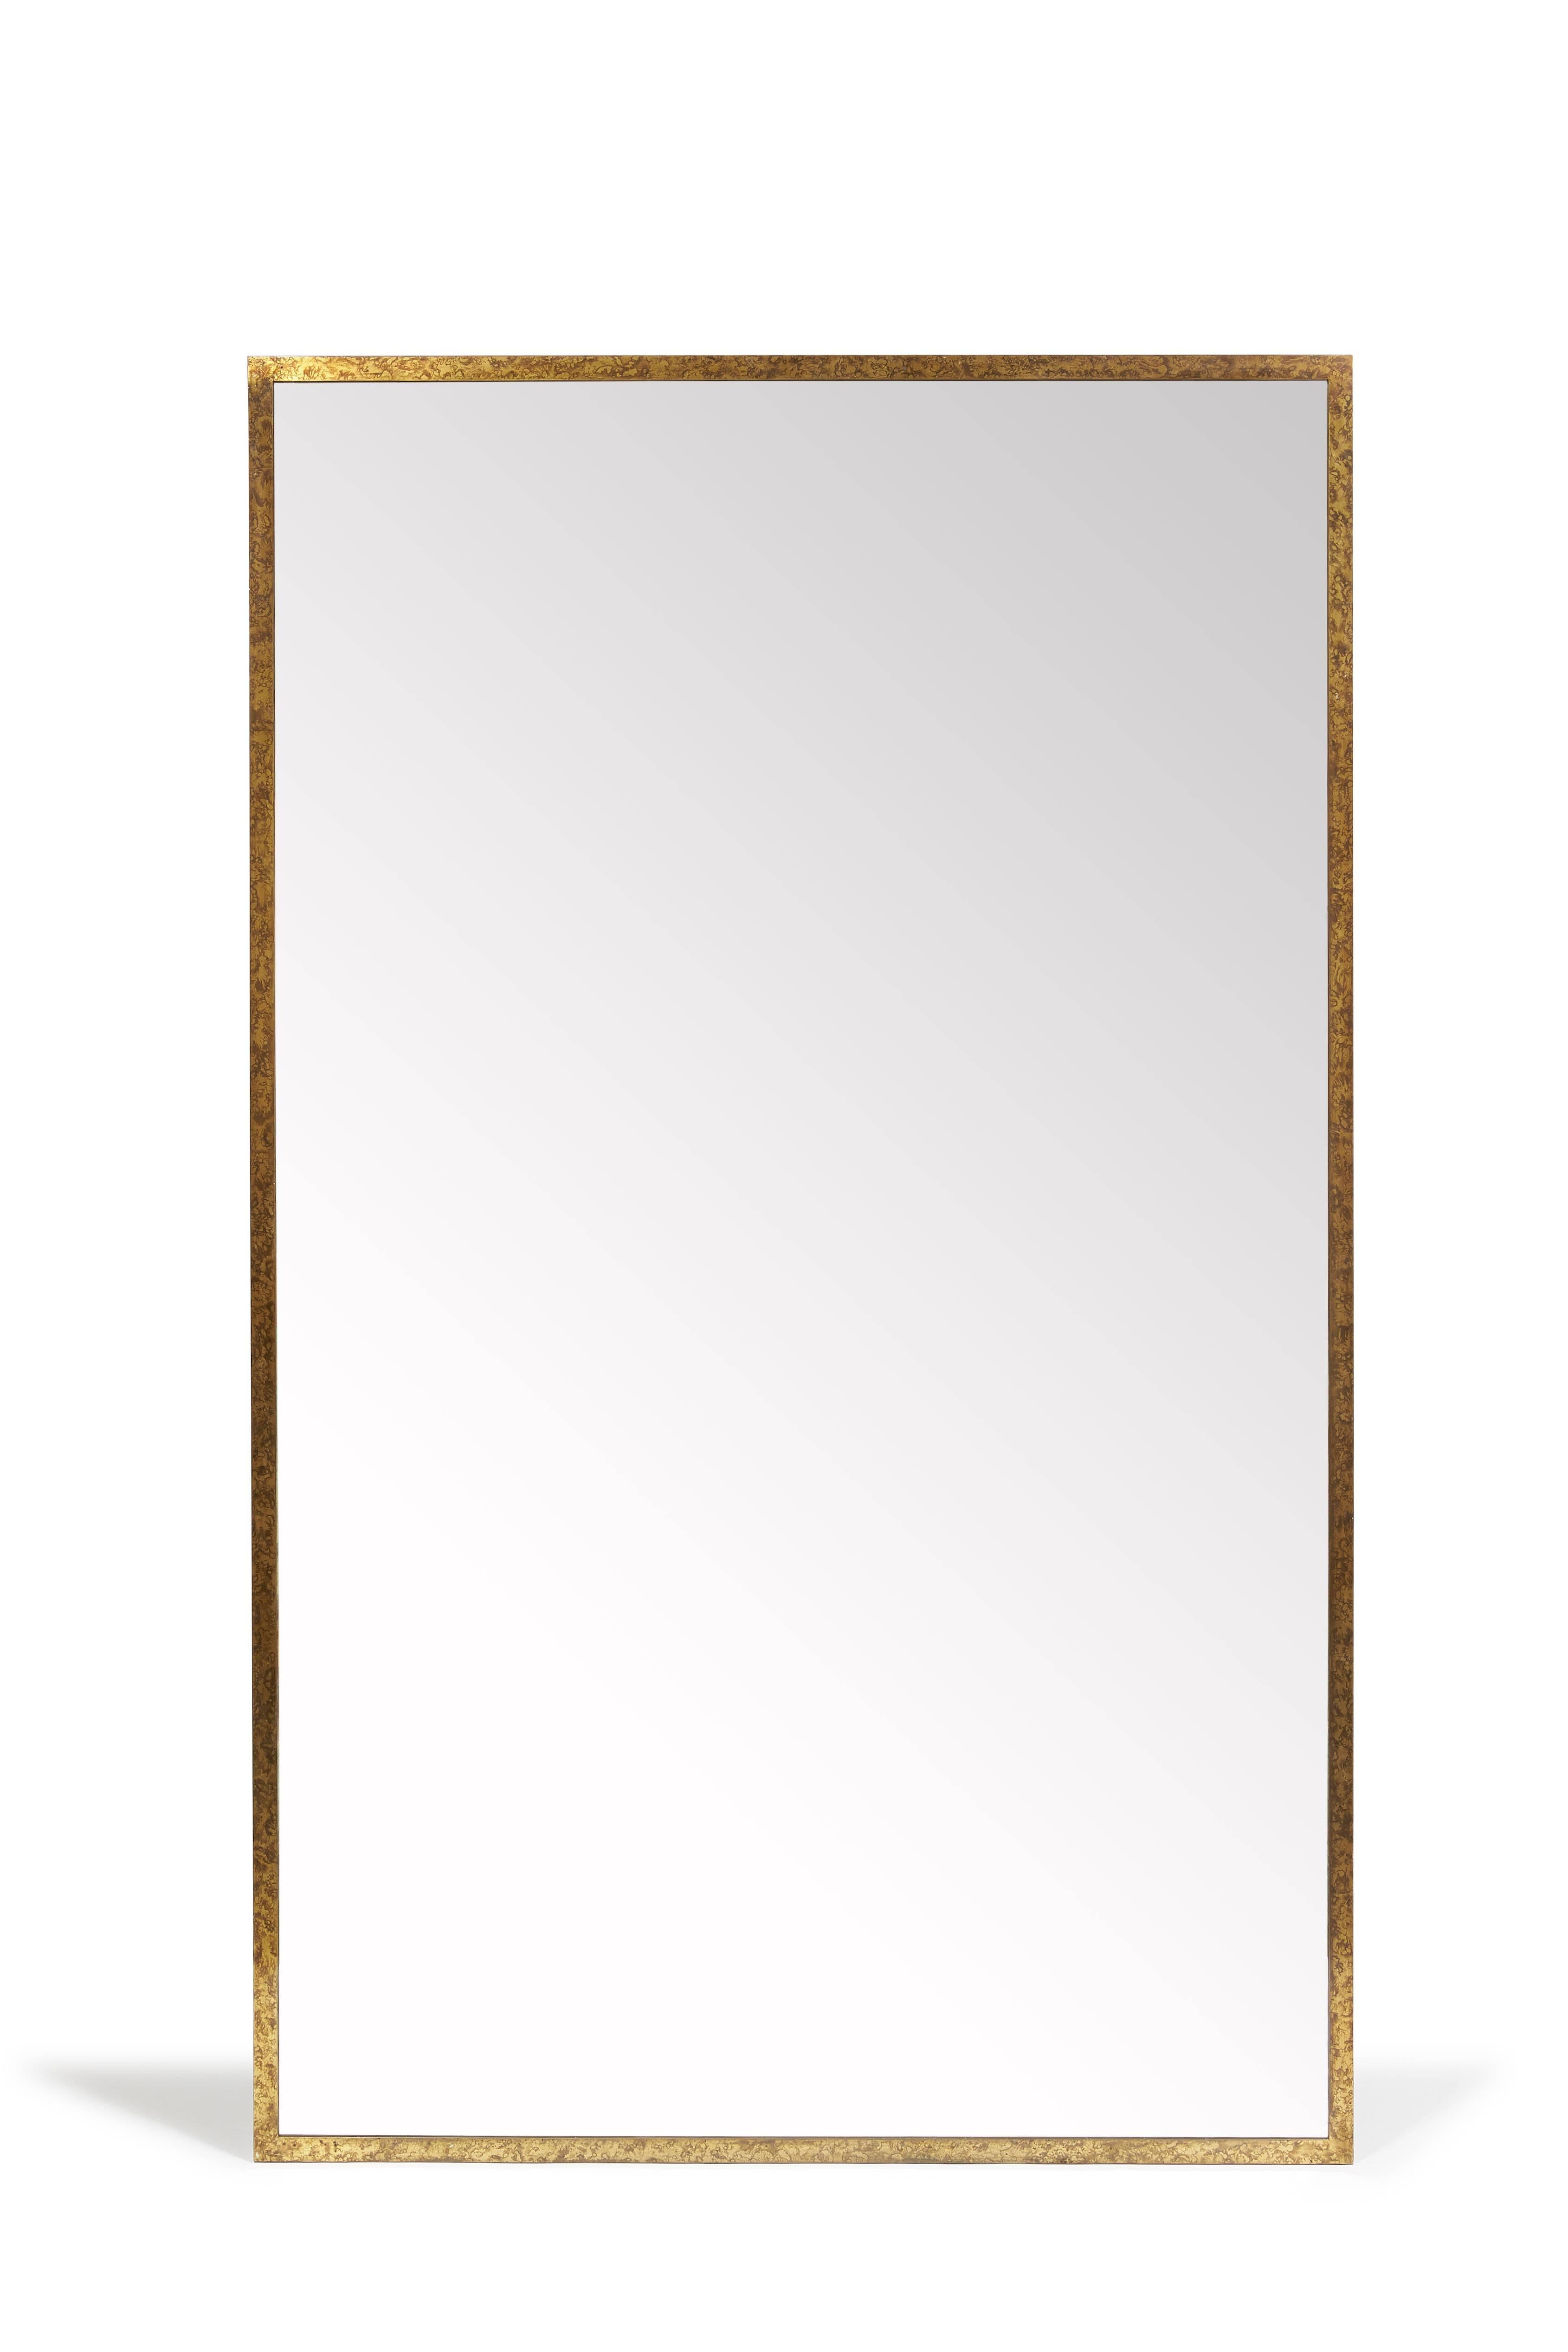 Rectangular frame in oxidized brass.